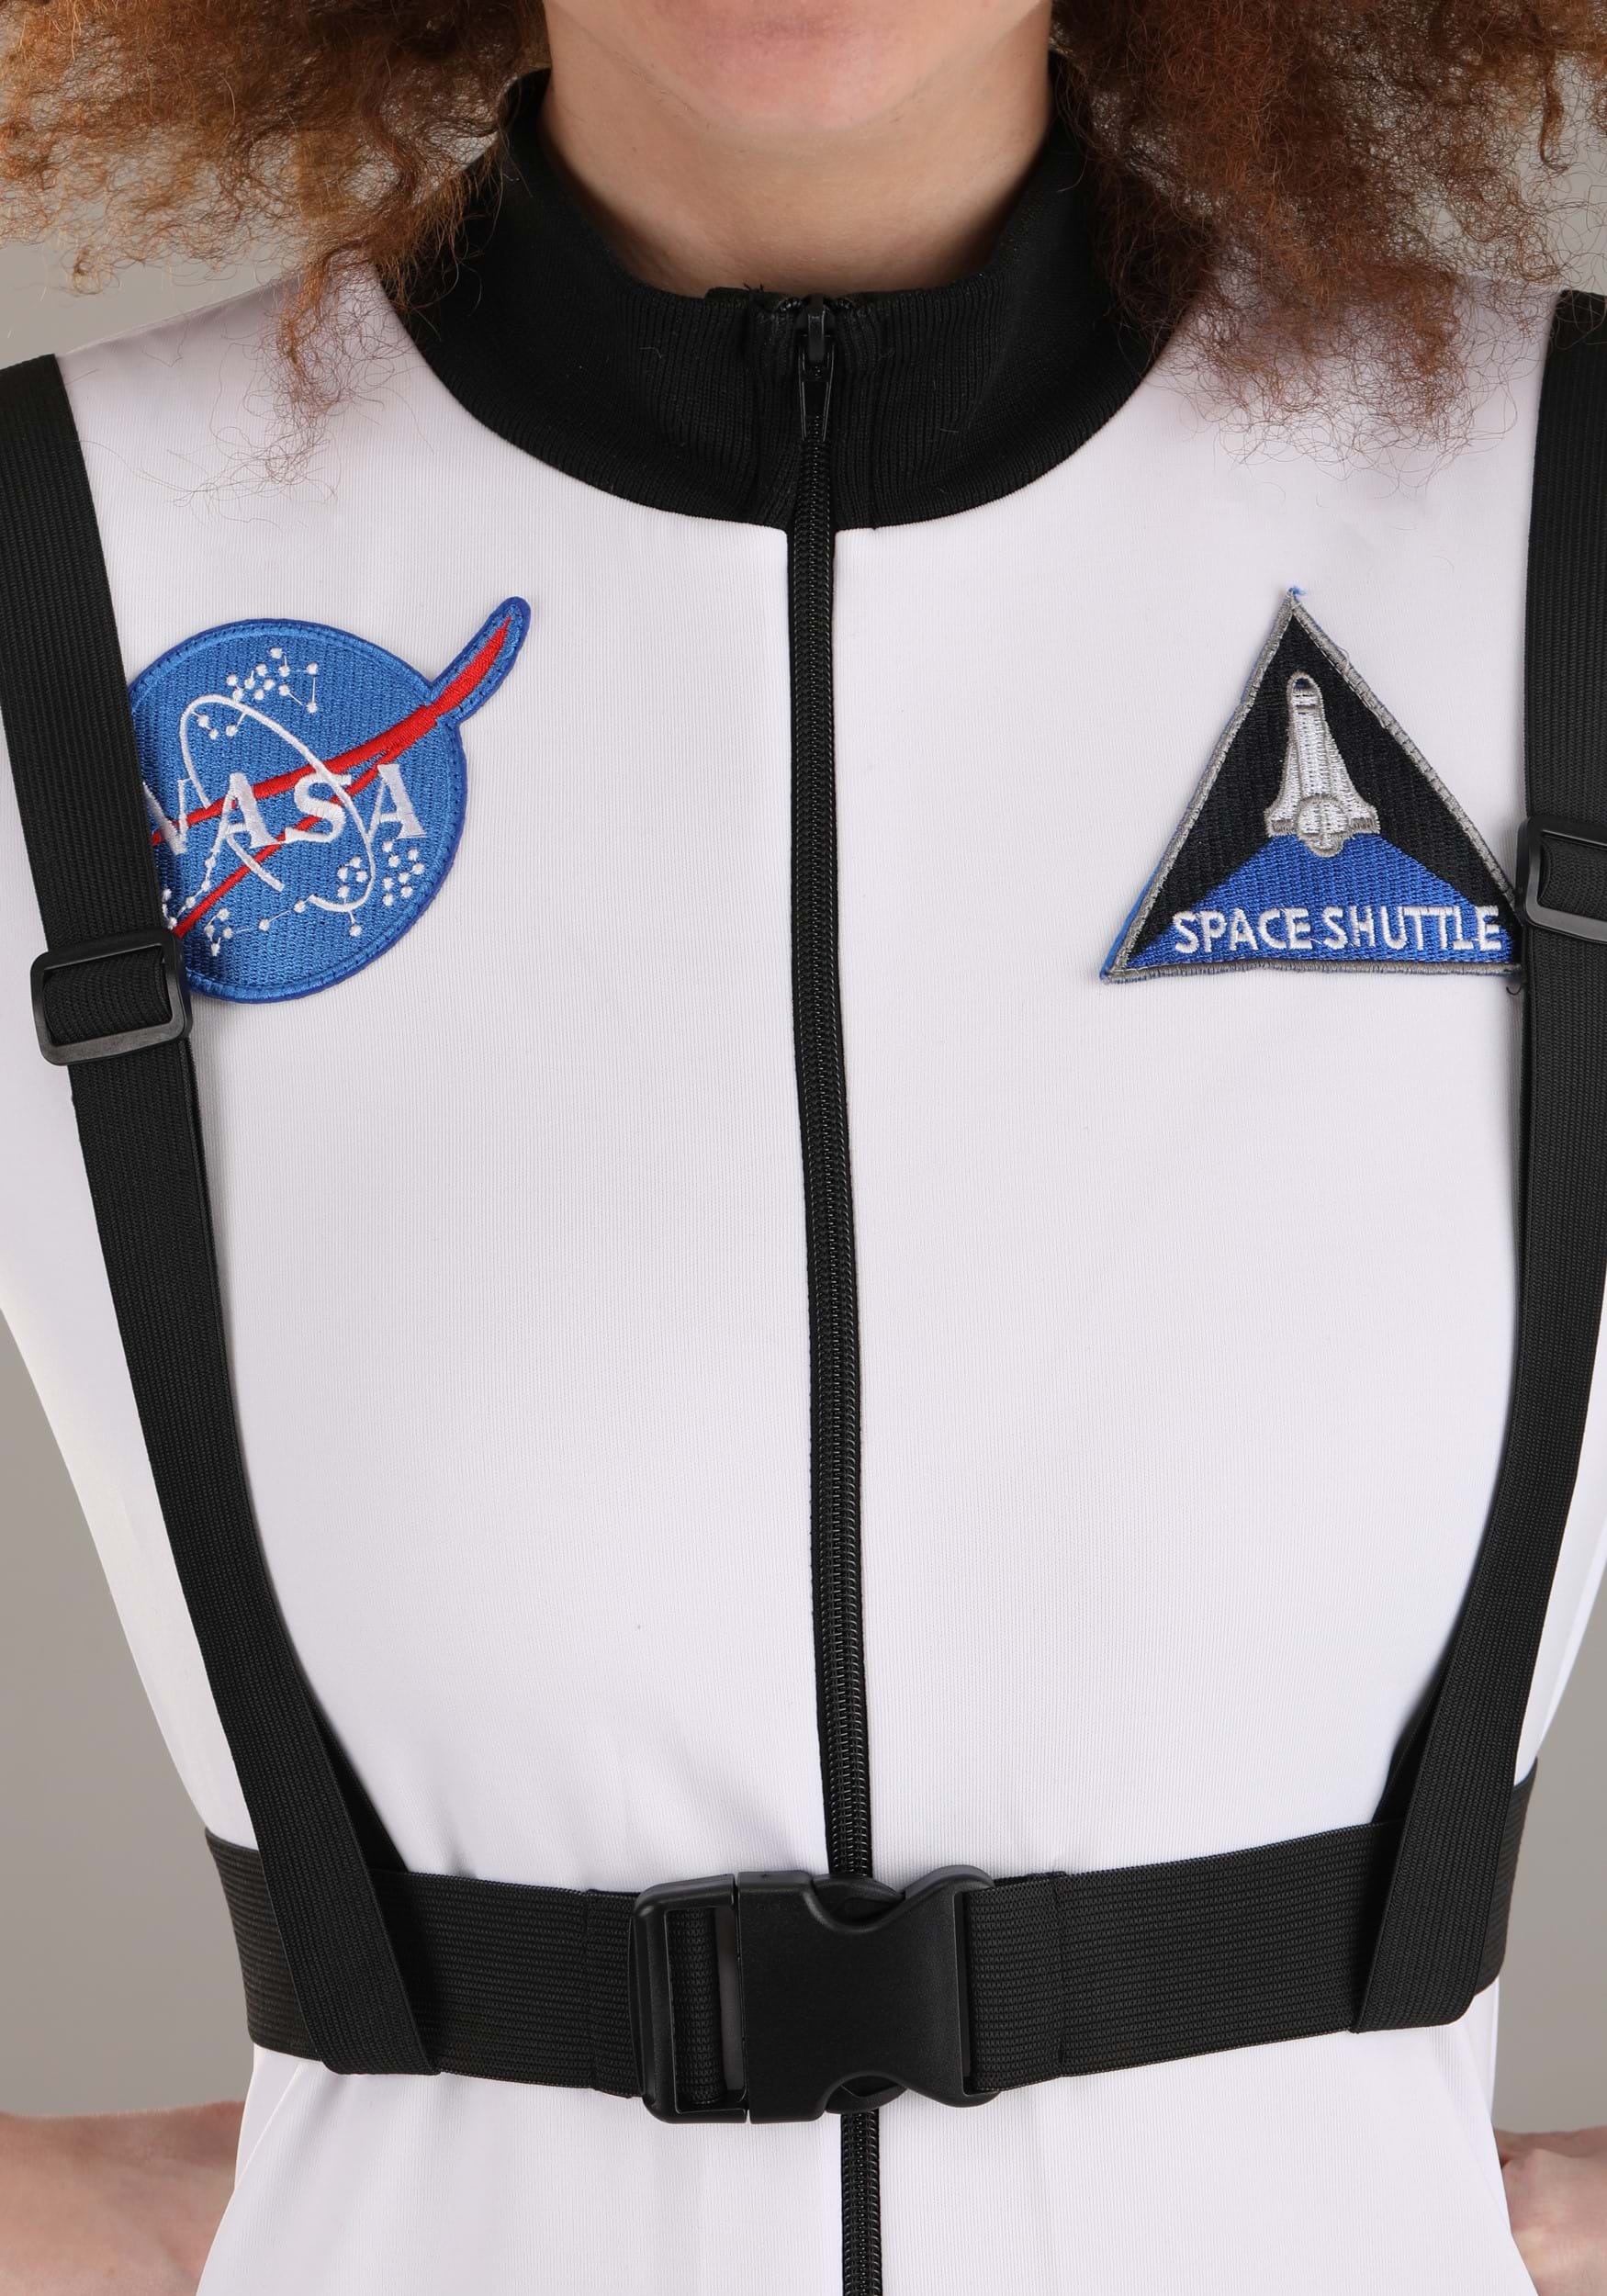 White Astronaut Suit Women's Fancy Dress Costume , Women's Halloween Fancy Dress Costumes